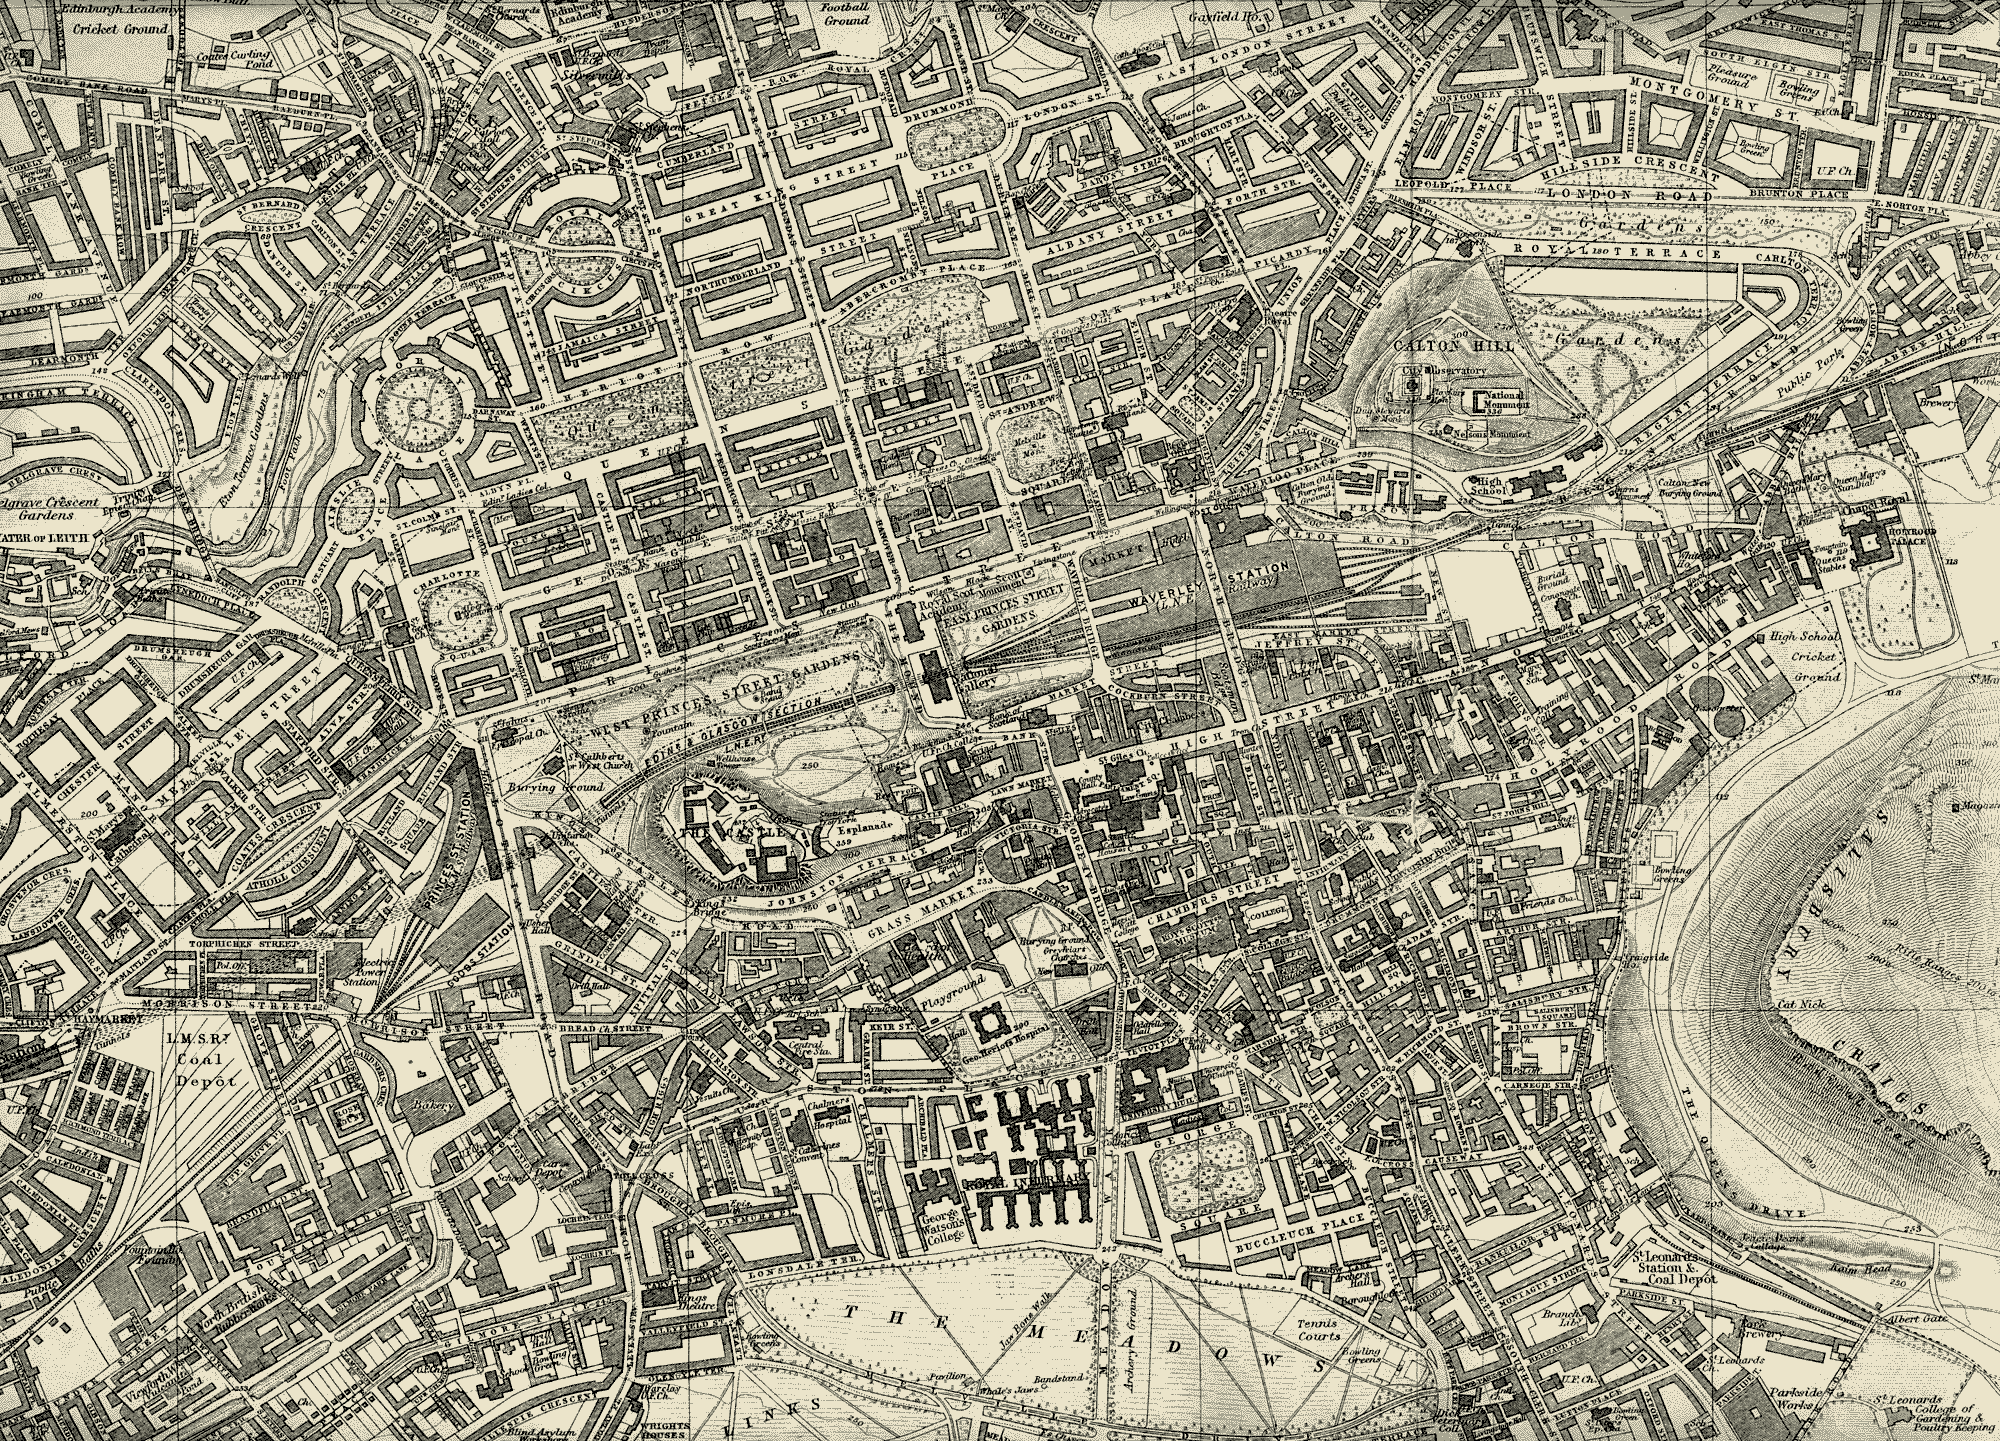 Edinburgh and Leith map, 1925  -  Central Edinburgh section  -  Enlarged